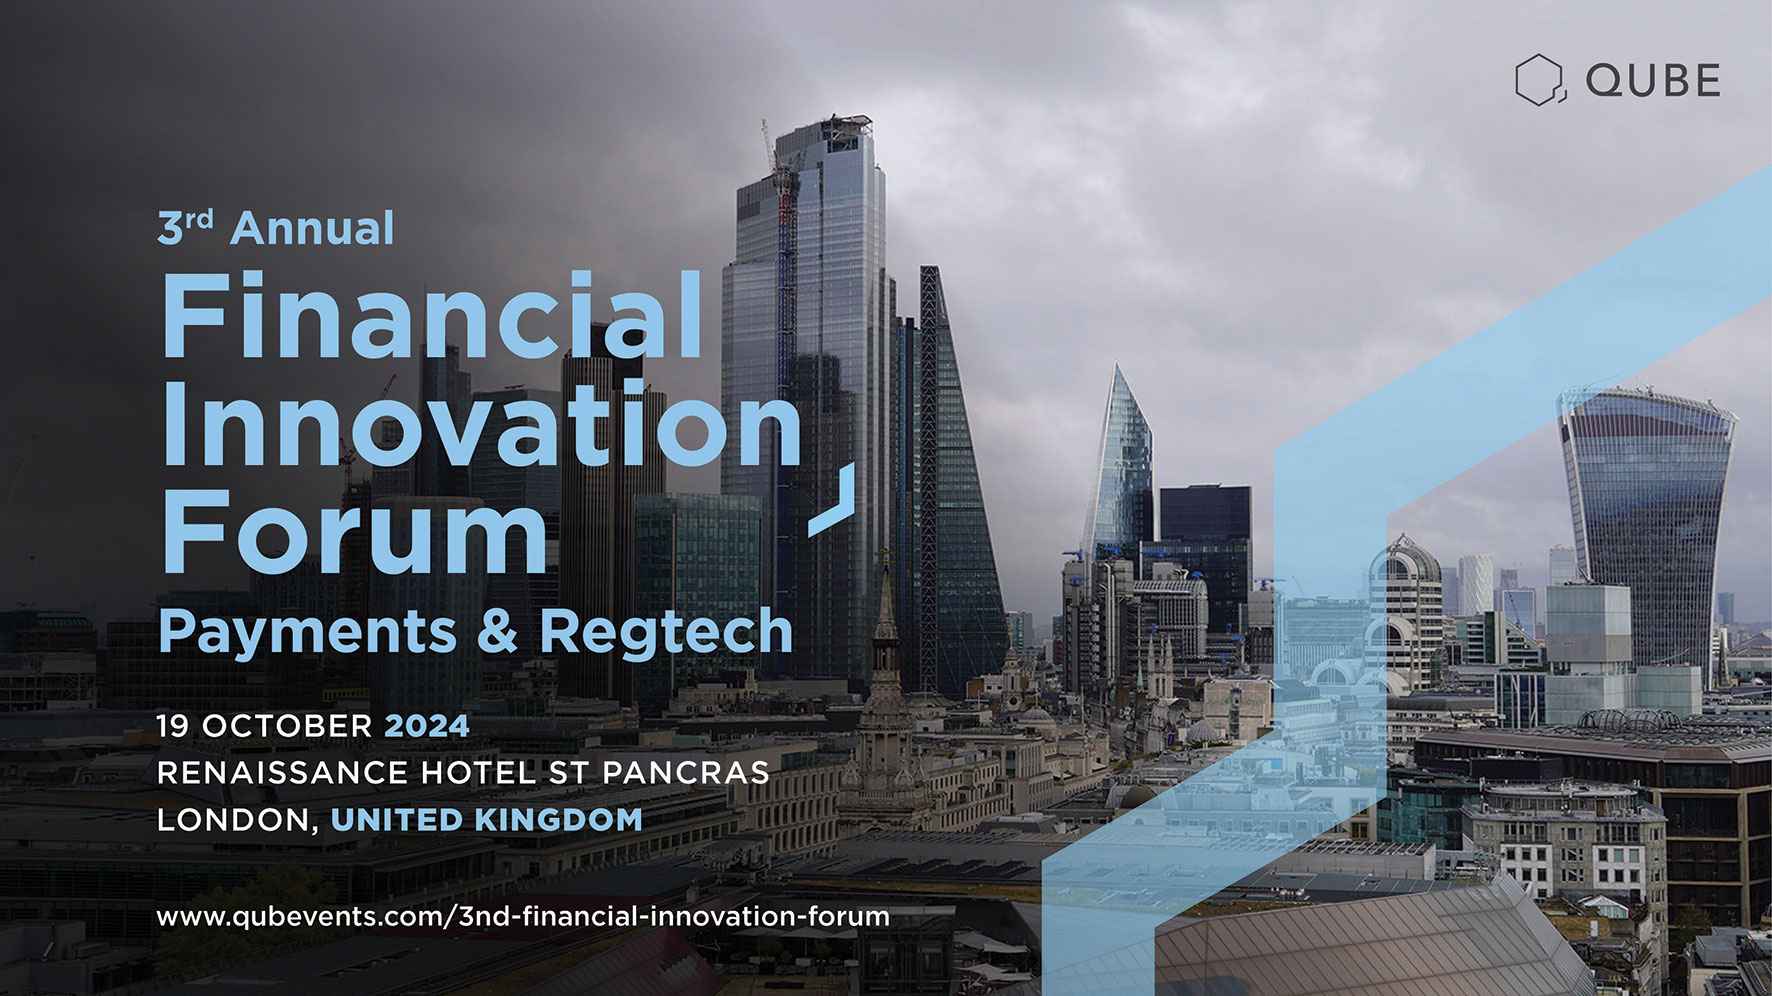 3rd Annual Financial Innovation Forum Payments & Regtech, Euston Rd., London NW1 2AR,London,United Kingdom